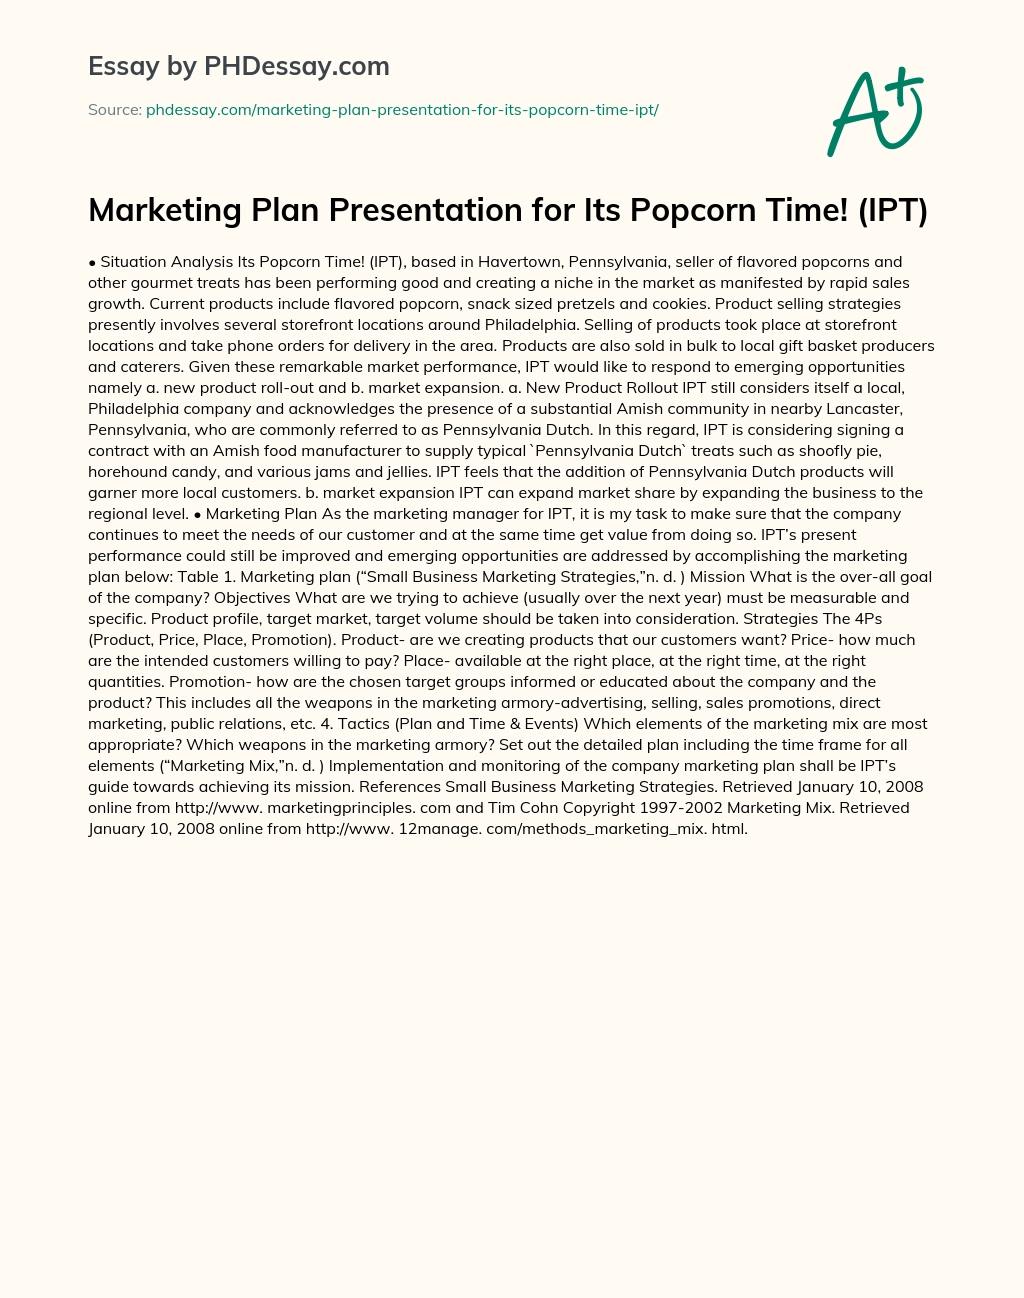 Marketing Plan Presentation for Its Popcorn Time! (IPT) essay